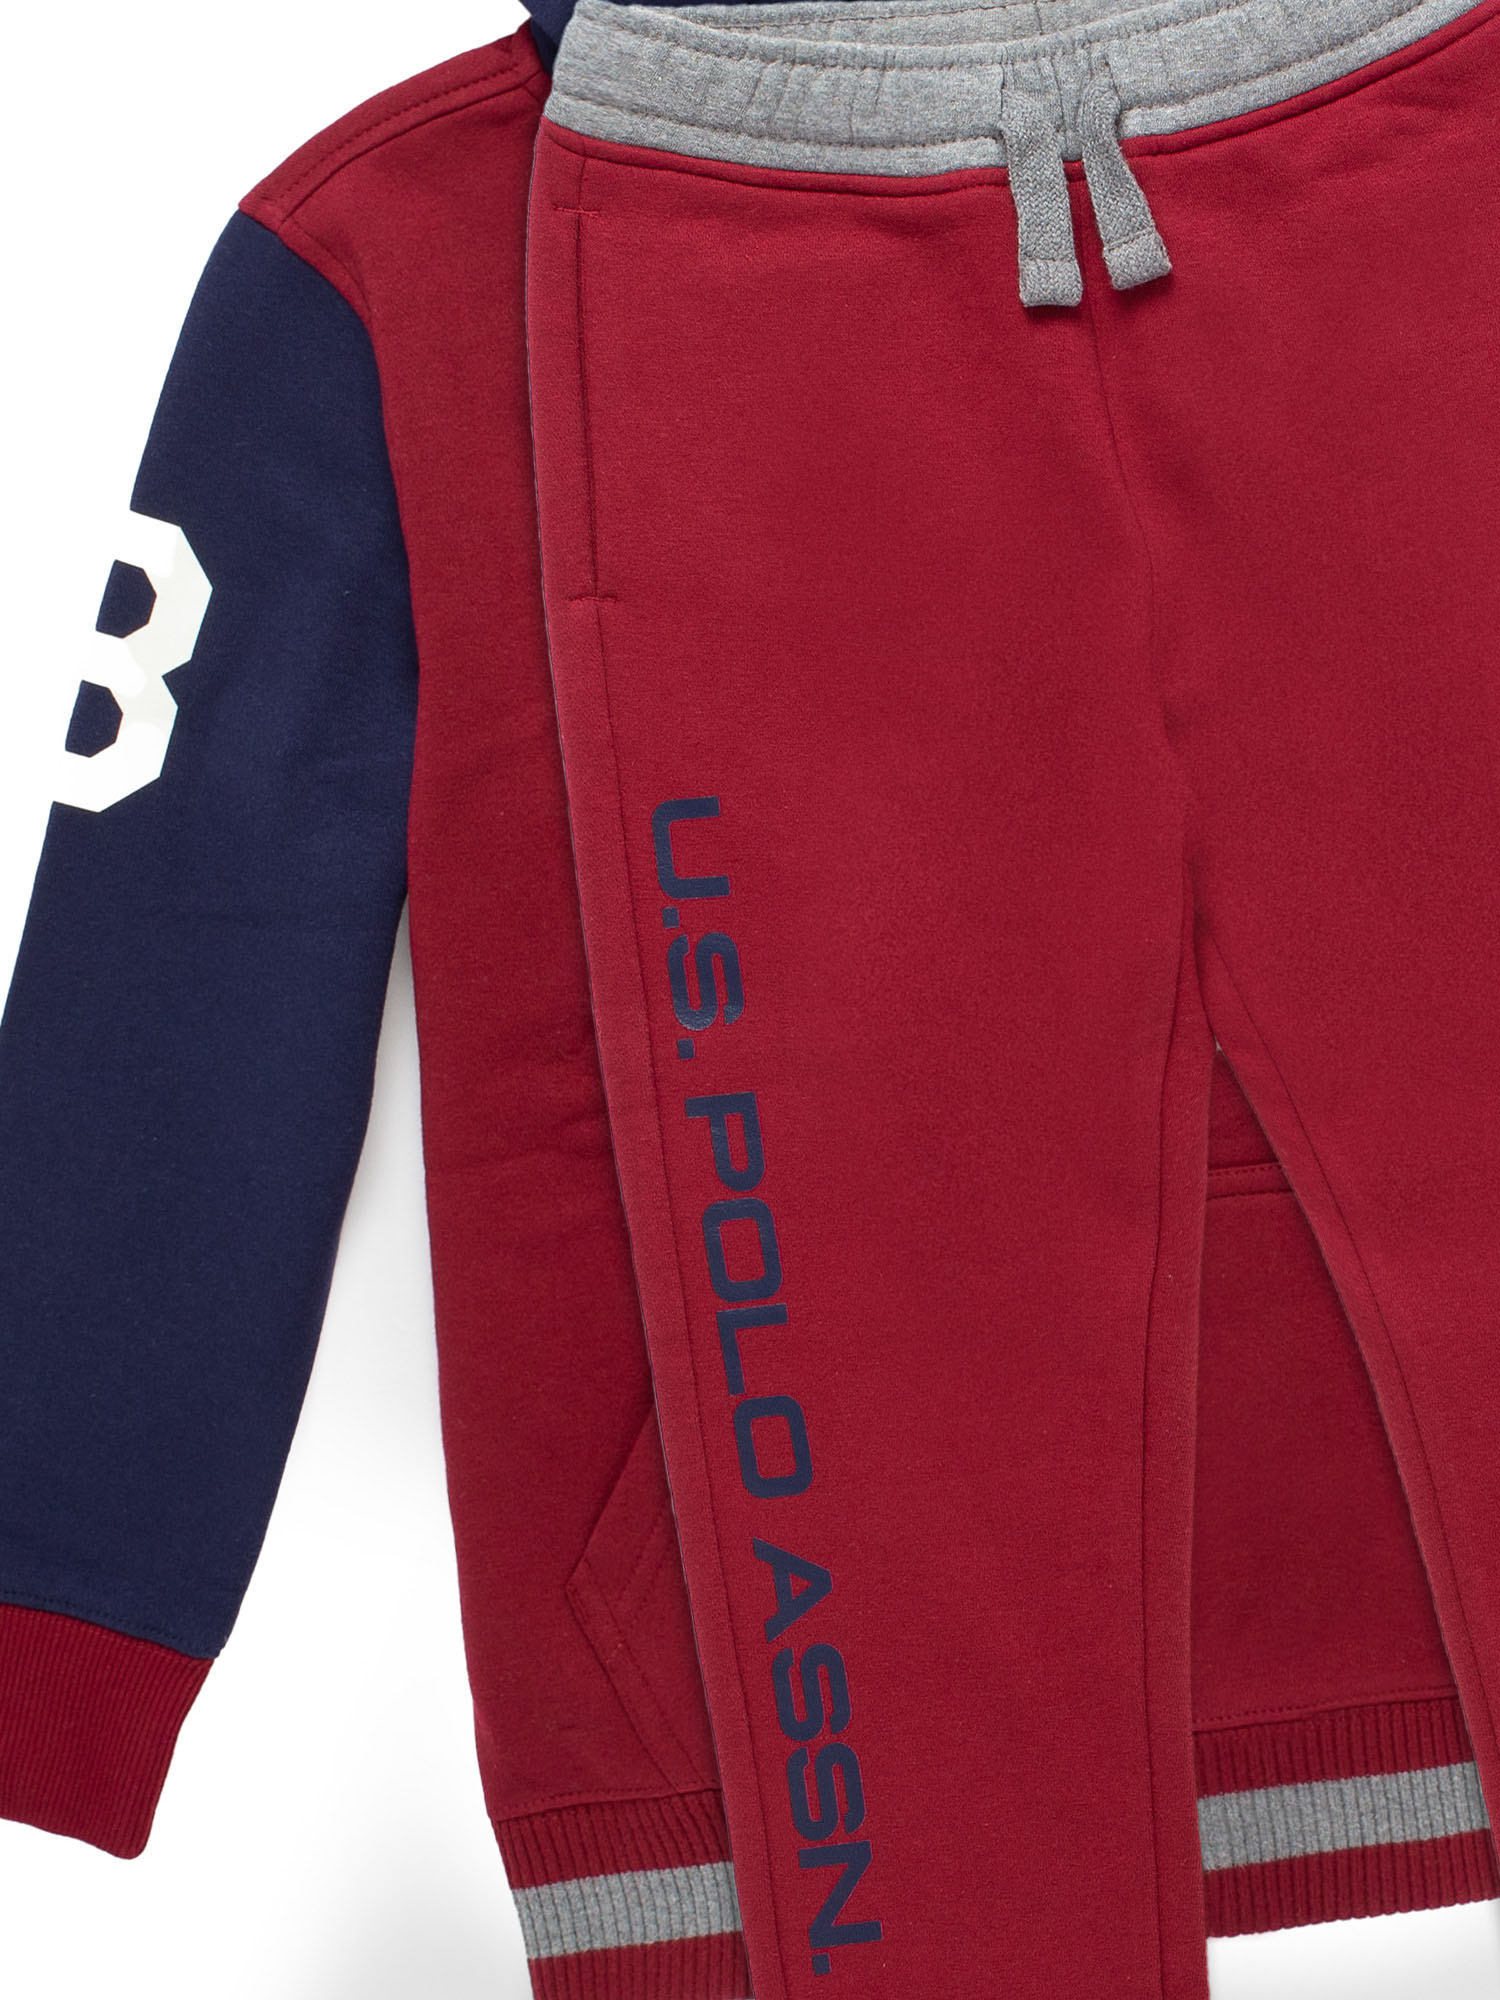 U.S. Polo Boys Fleece Colorblock Zip up Hoodie & Sweatpant Set , 2-Pack, Sizes 4-18 - image 5 of 7